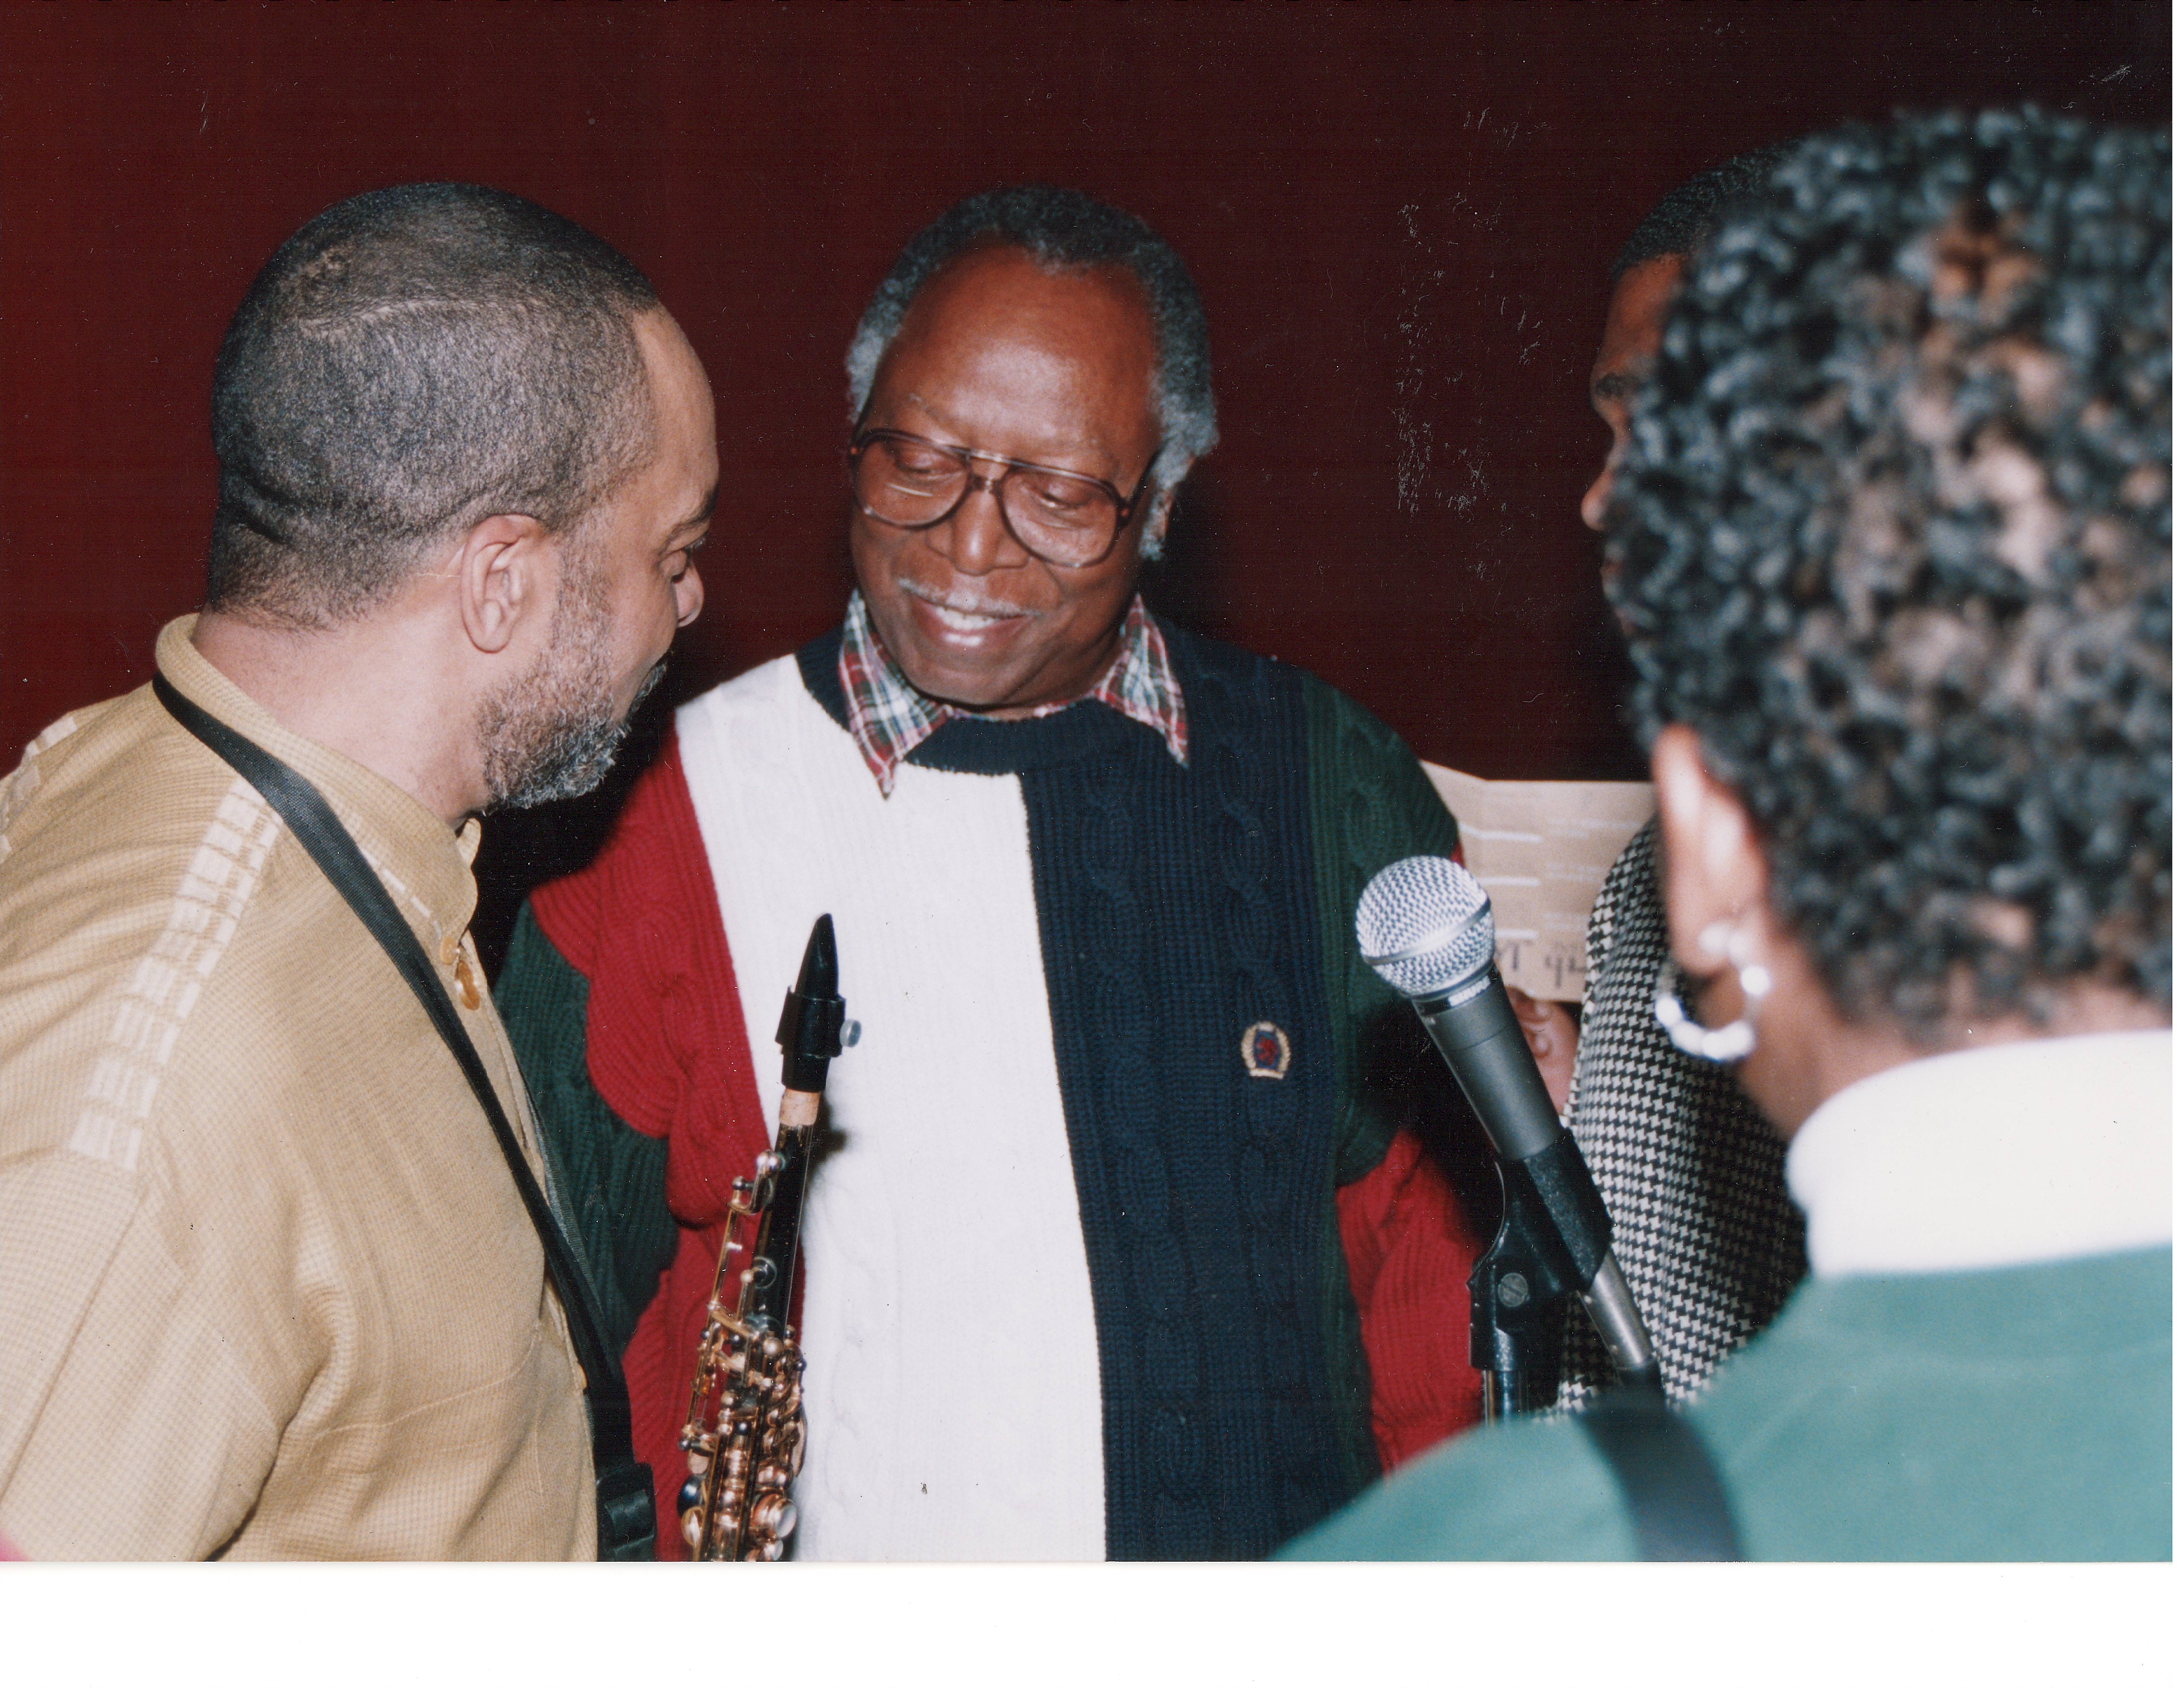 Dr. Lampkins with Mr. Grover Washington, Jr.